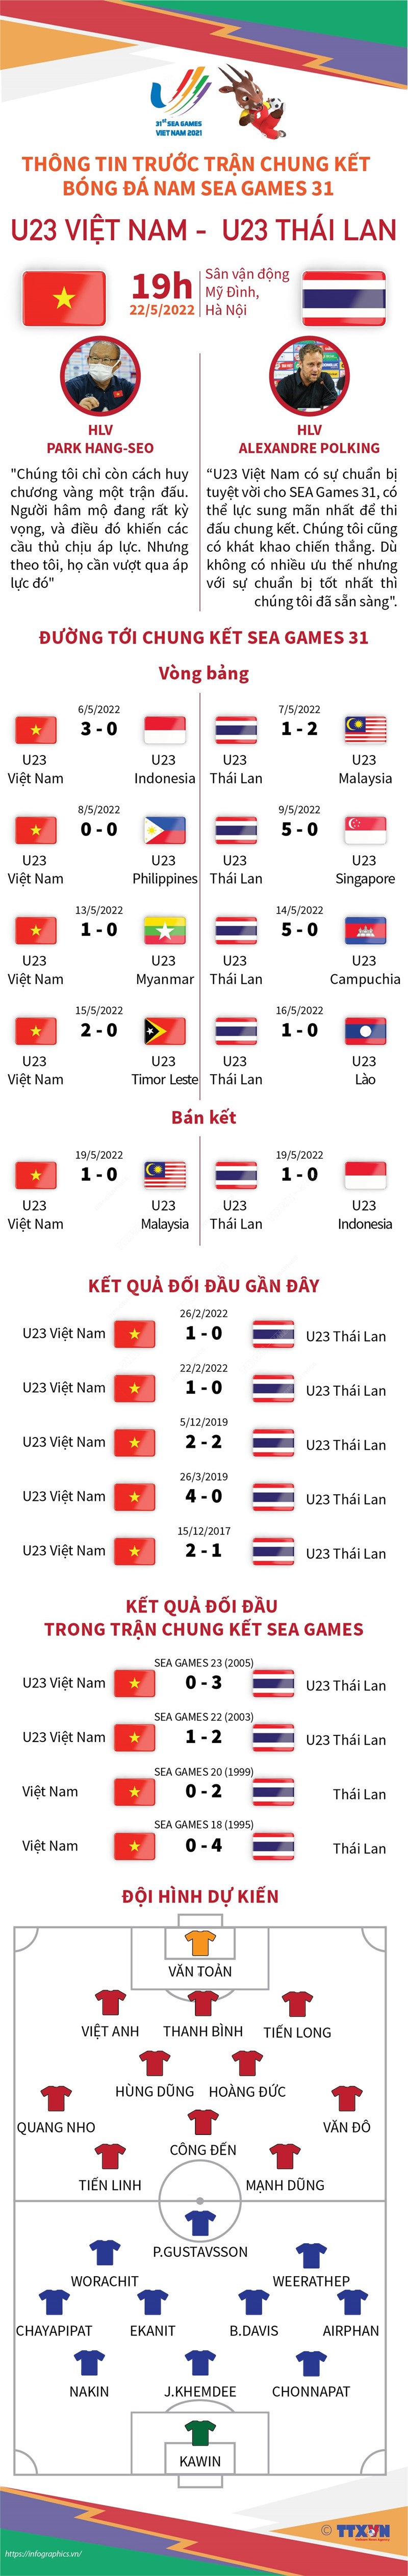 Thong tin dang chu y truoc tran chung ket U23 Viet Nam-U23 Thai Lan hinh anh 1